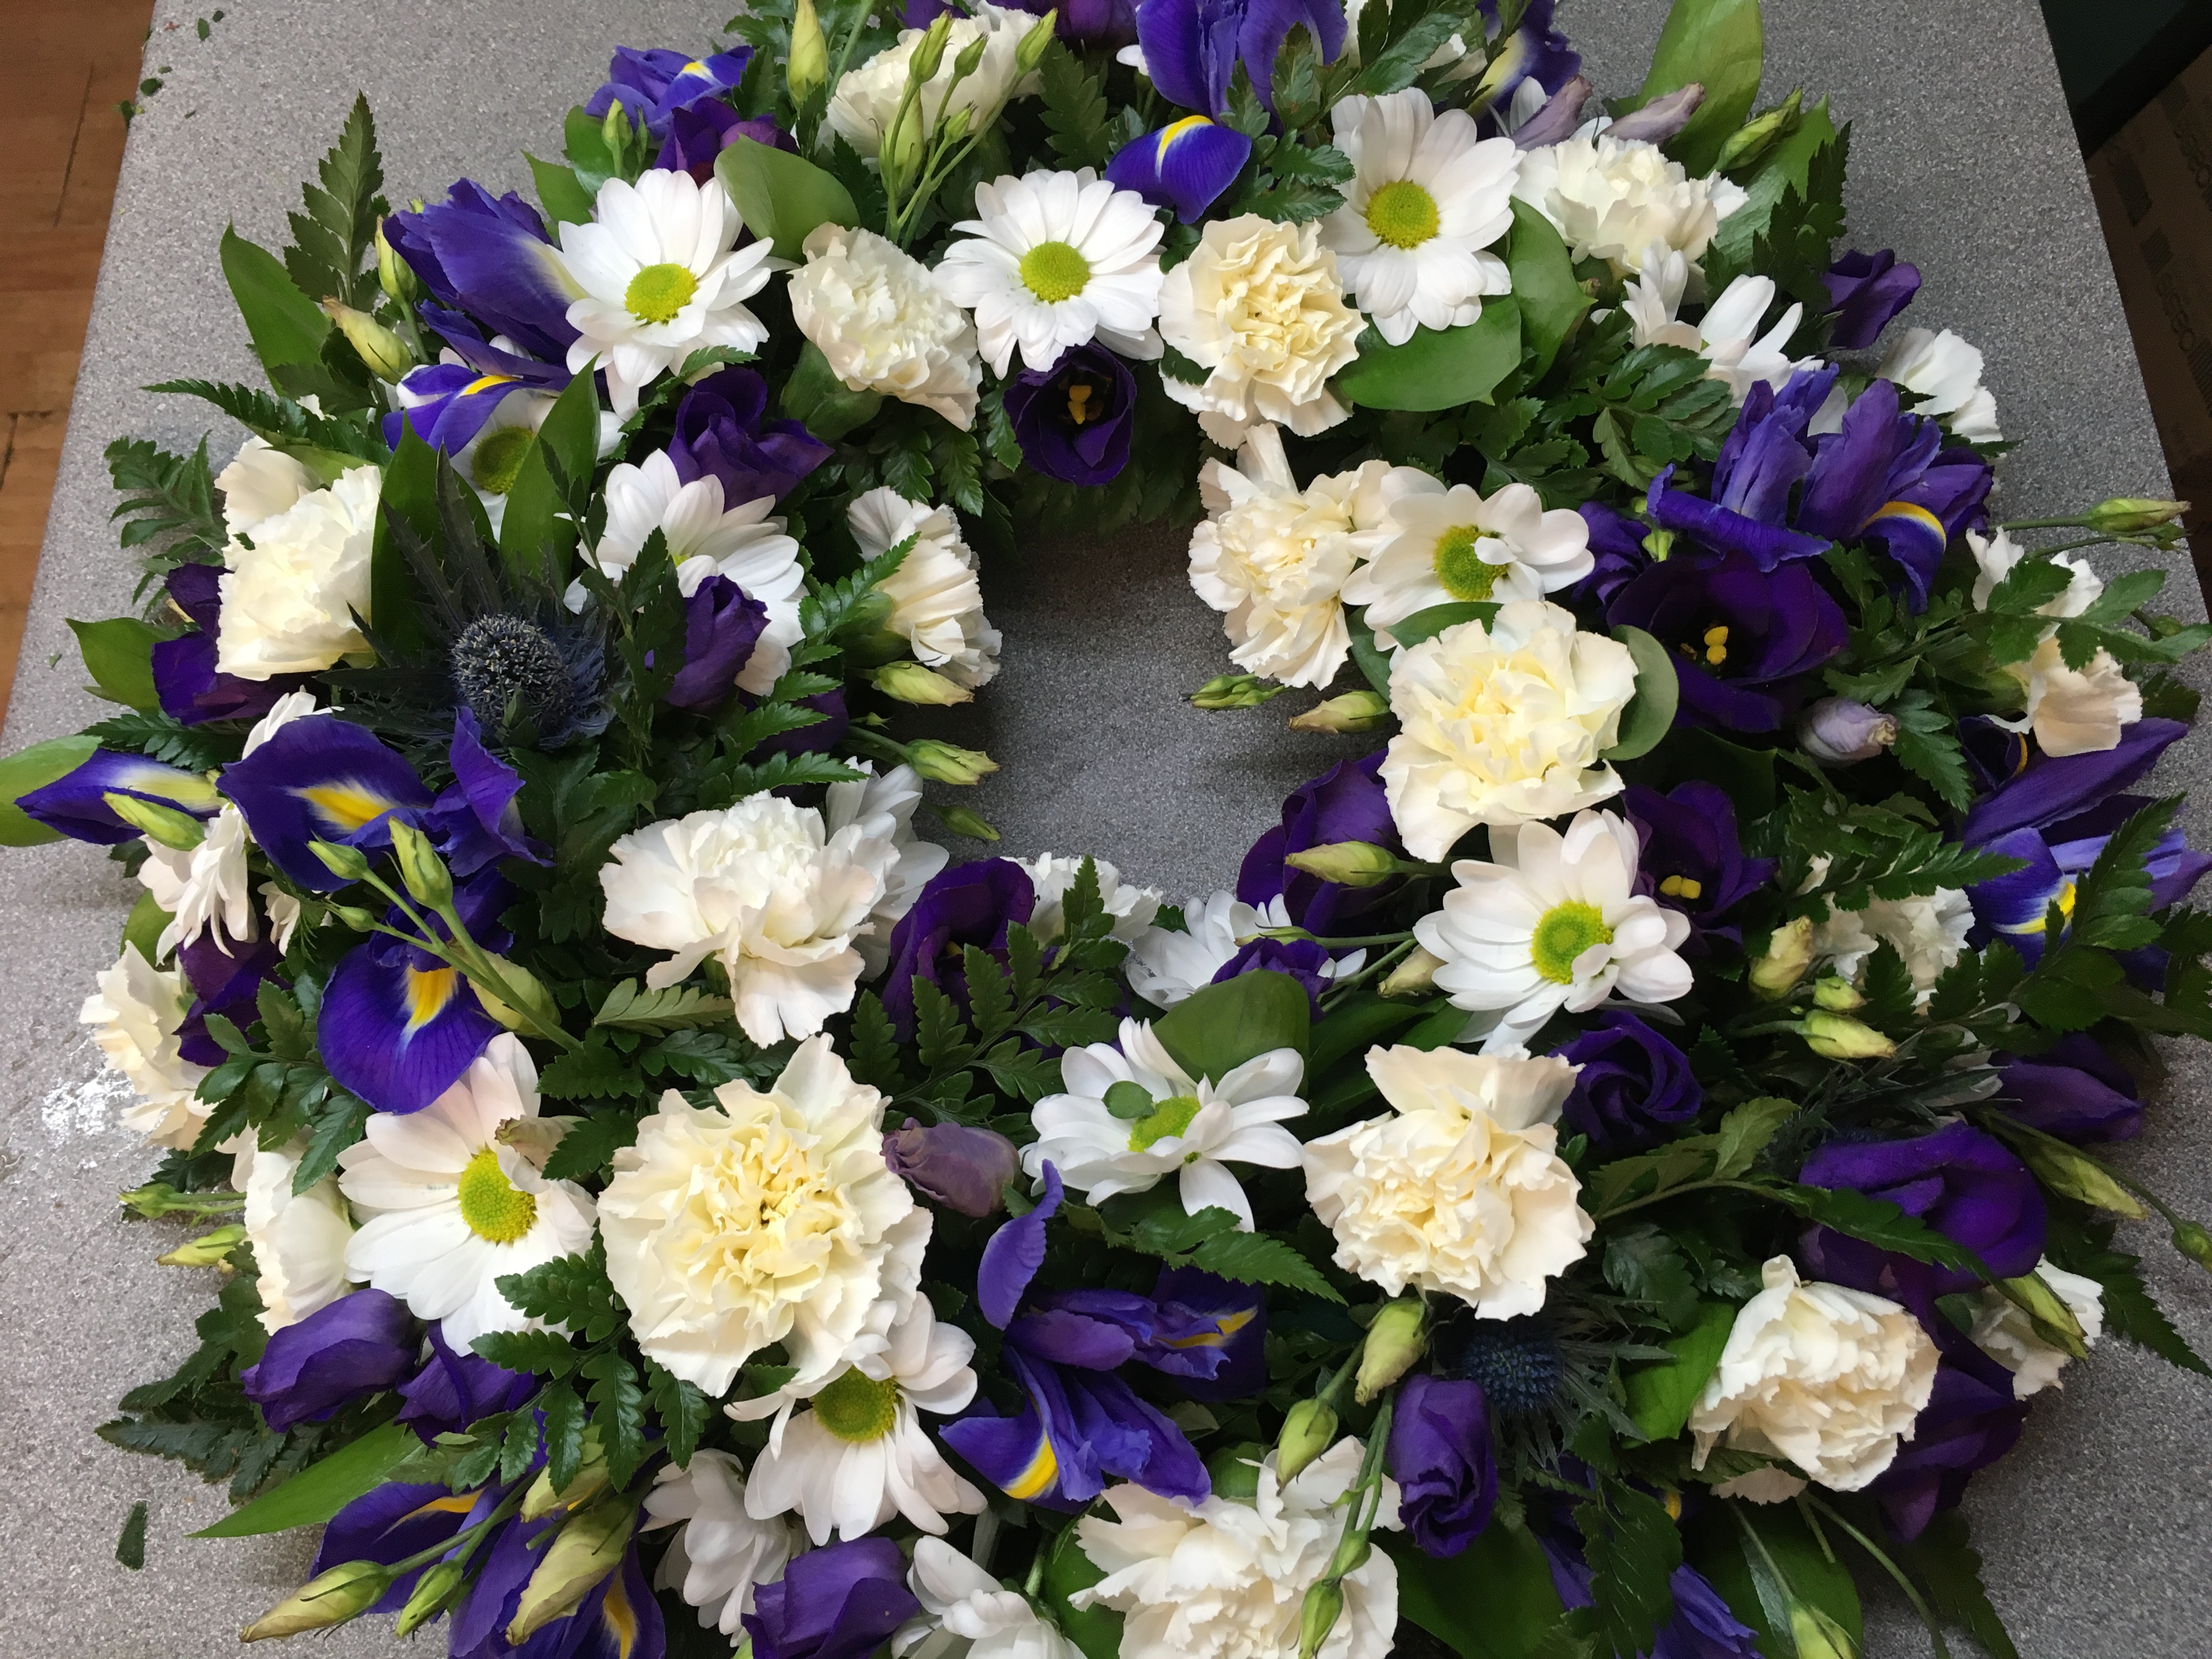 floral funeral wreath loose flowers 16"